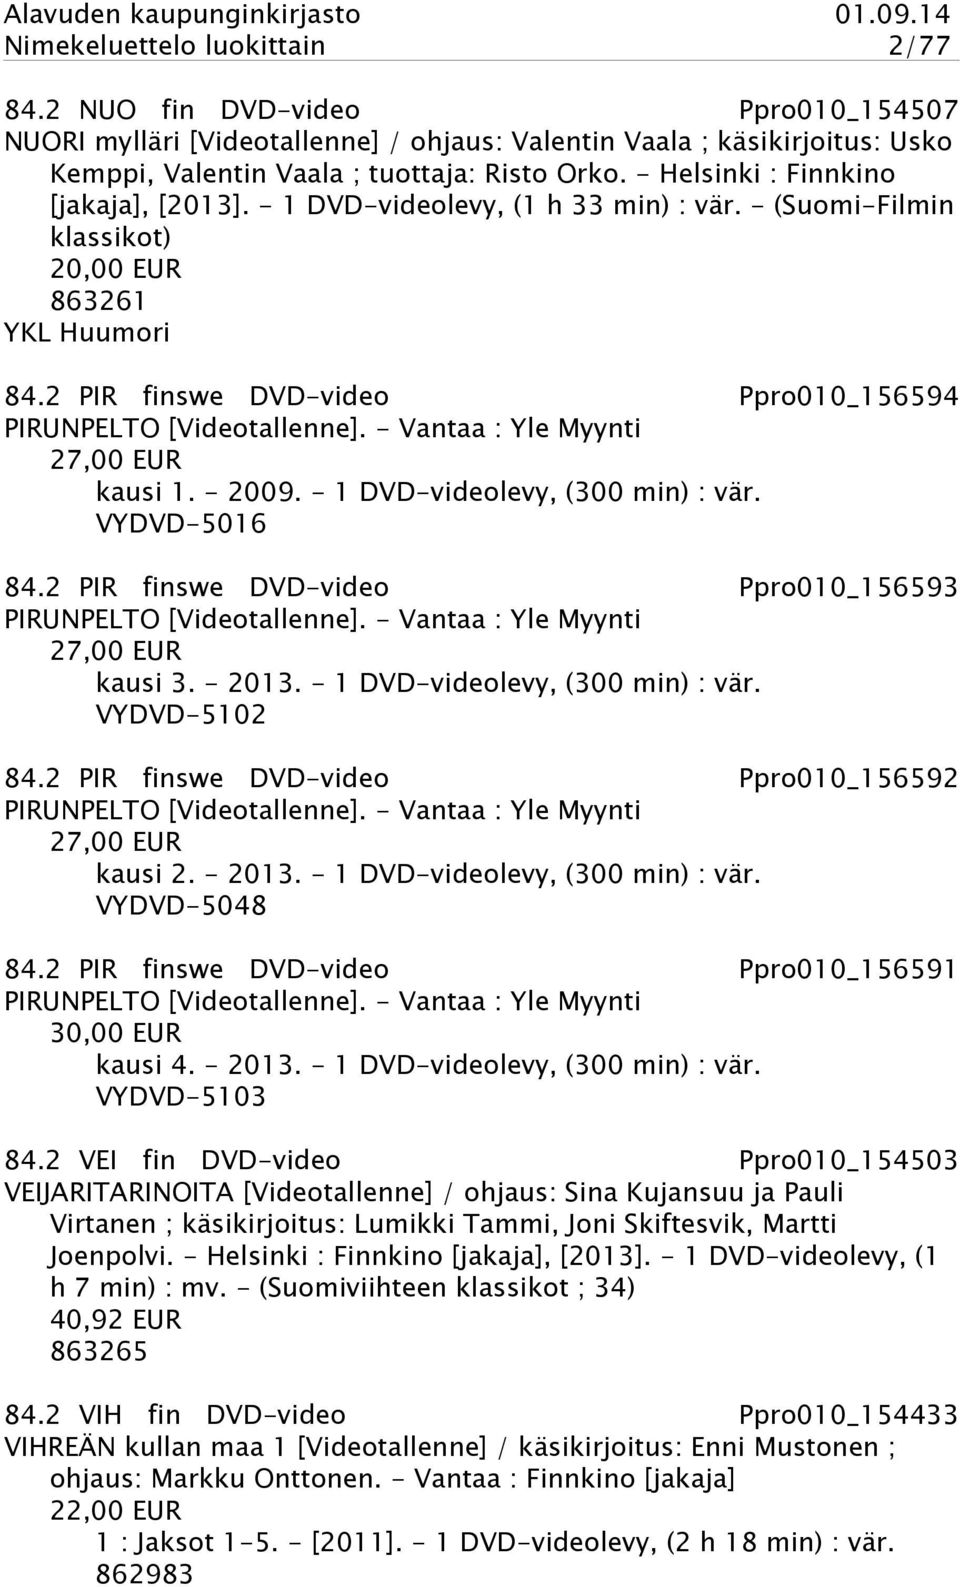 2 PIR finswe DVD-video Ppro010_156594 PIRUNPELTO [Videotallenne]. - Vantaa : Yle Myynti 27,00 EUR kausi 1. - 2009. - 1 DVD-videolevy, (300 min) : vär. VYDVD-5016 84.